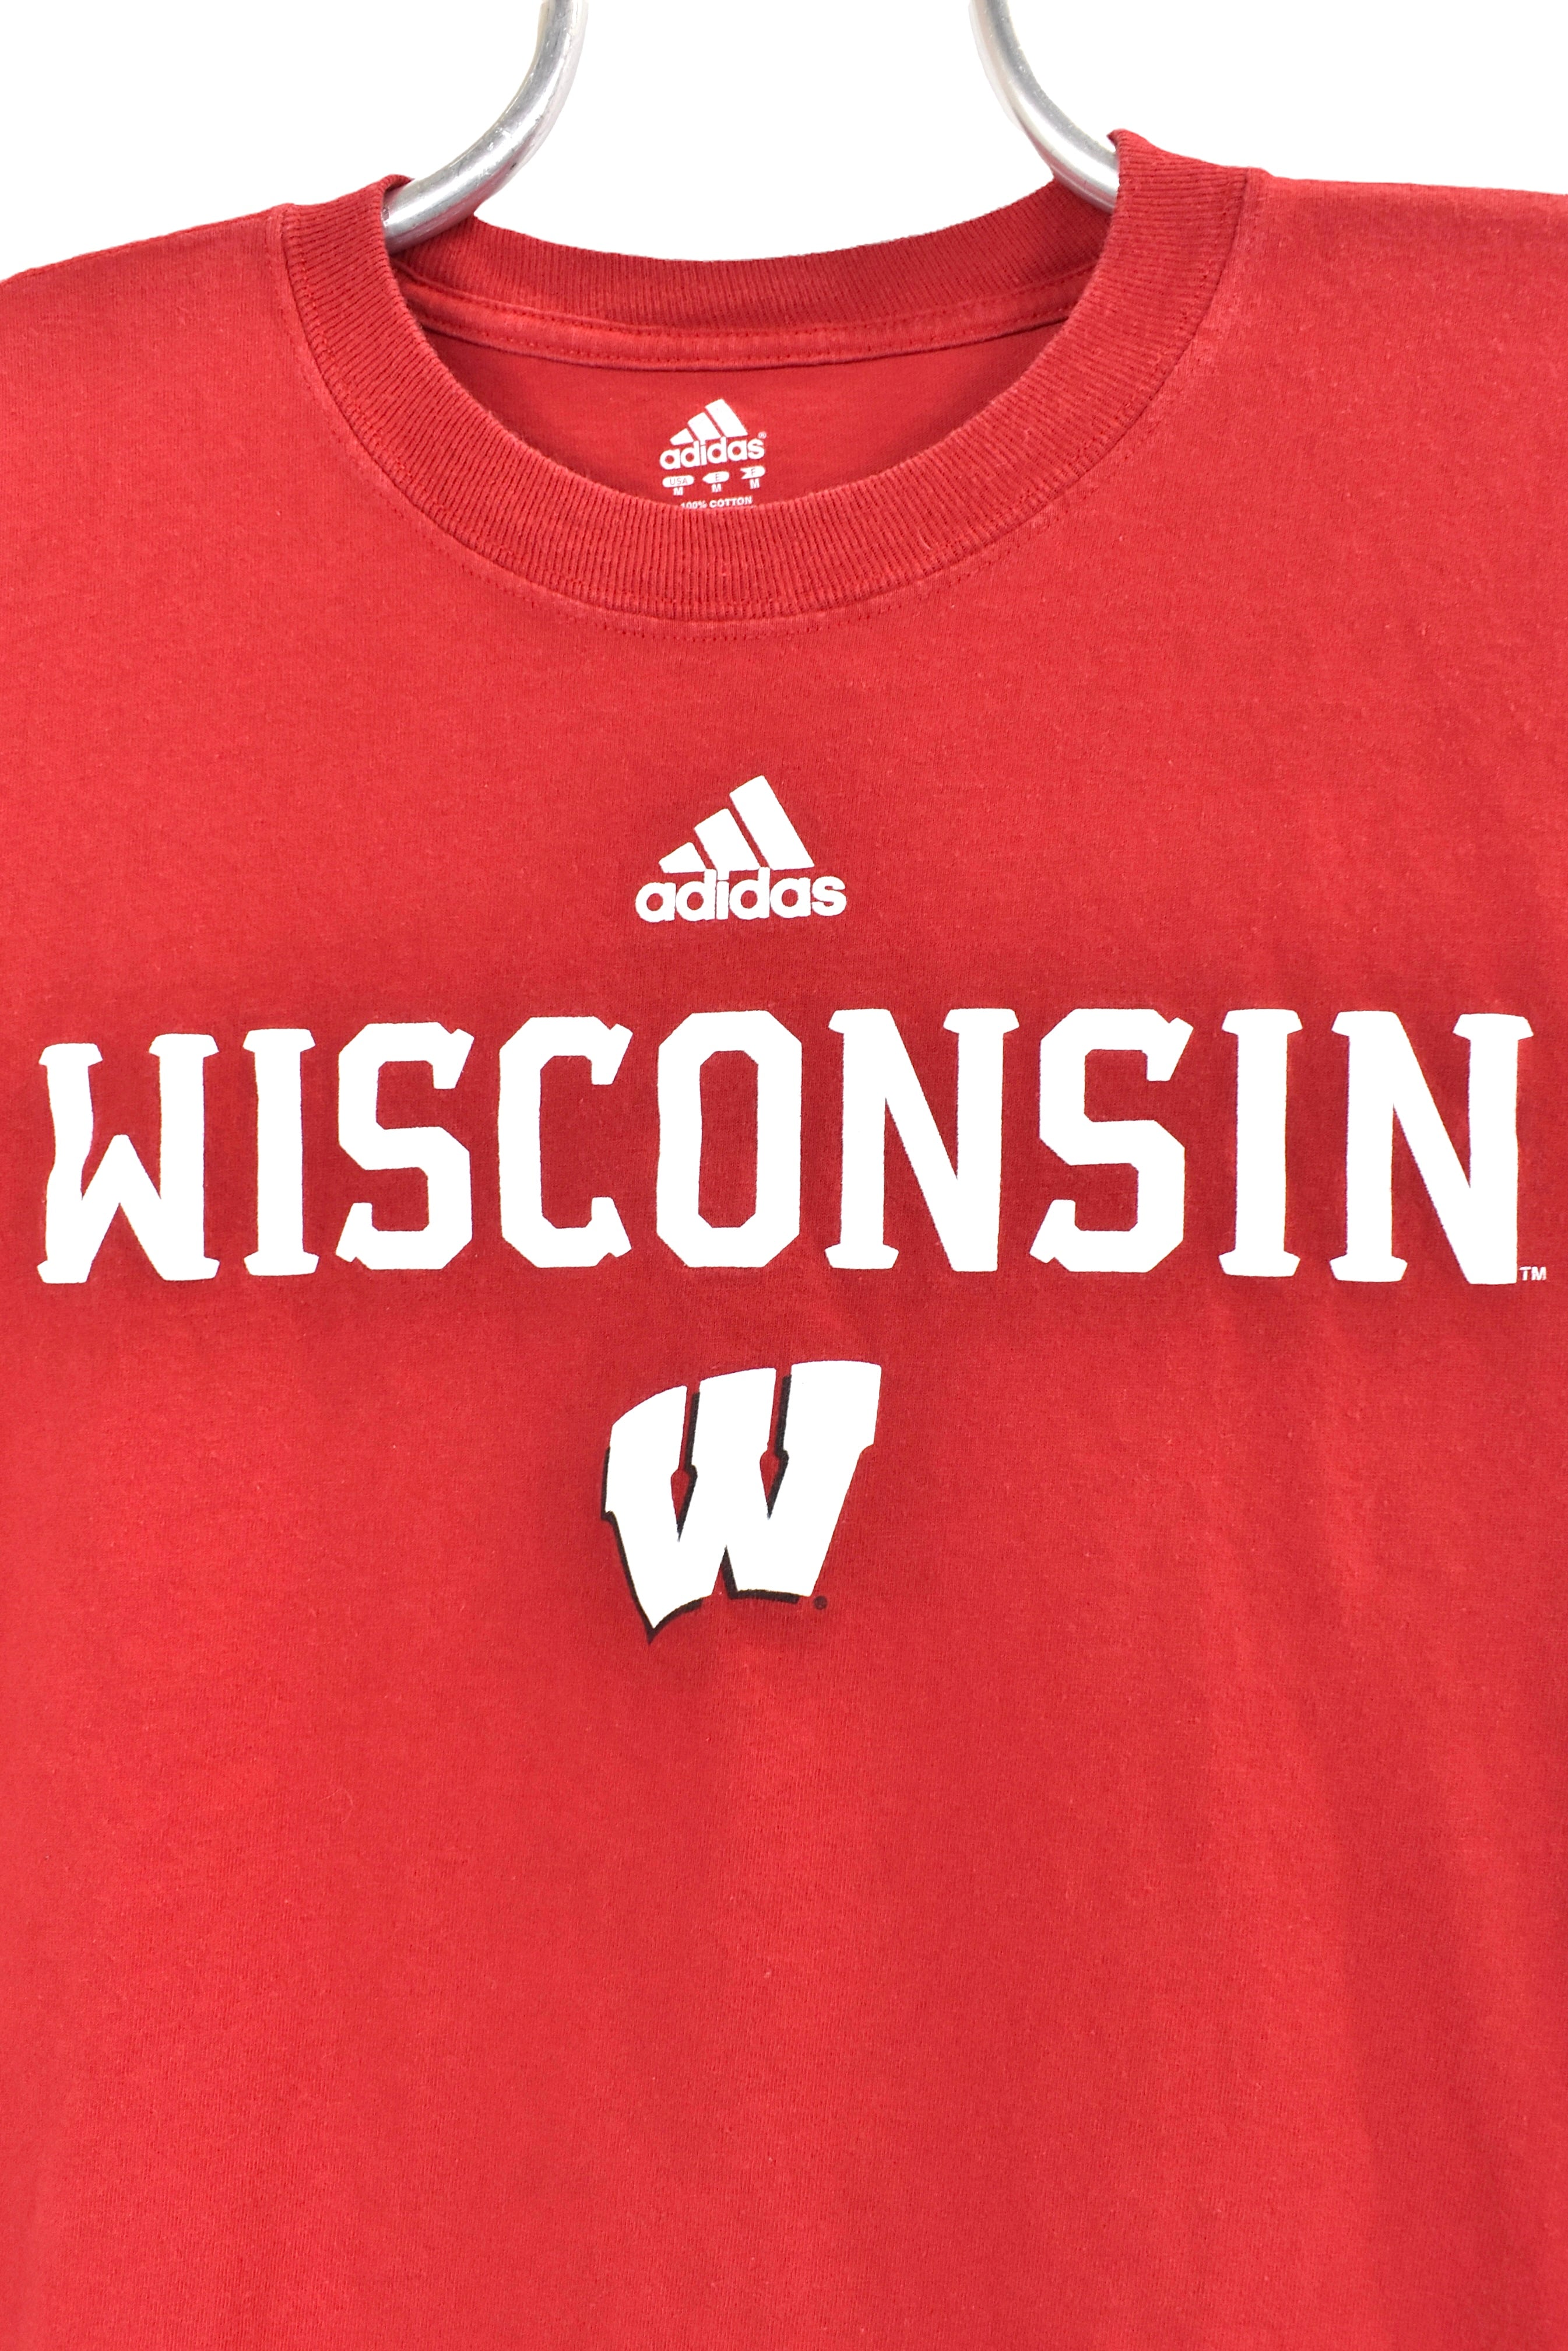 Vintage University of Wisconsin shirt, red graphic tee - AU Medium COLLEGE